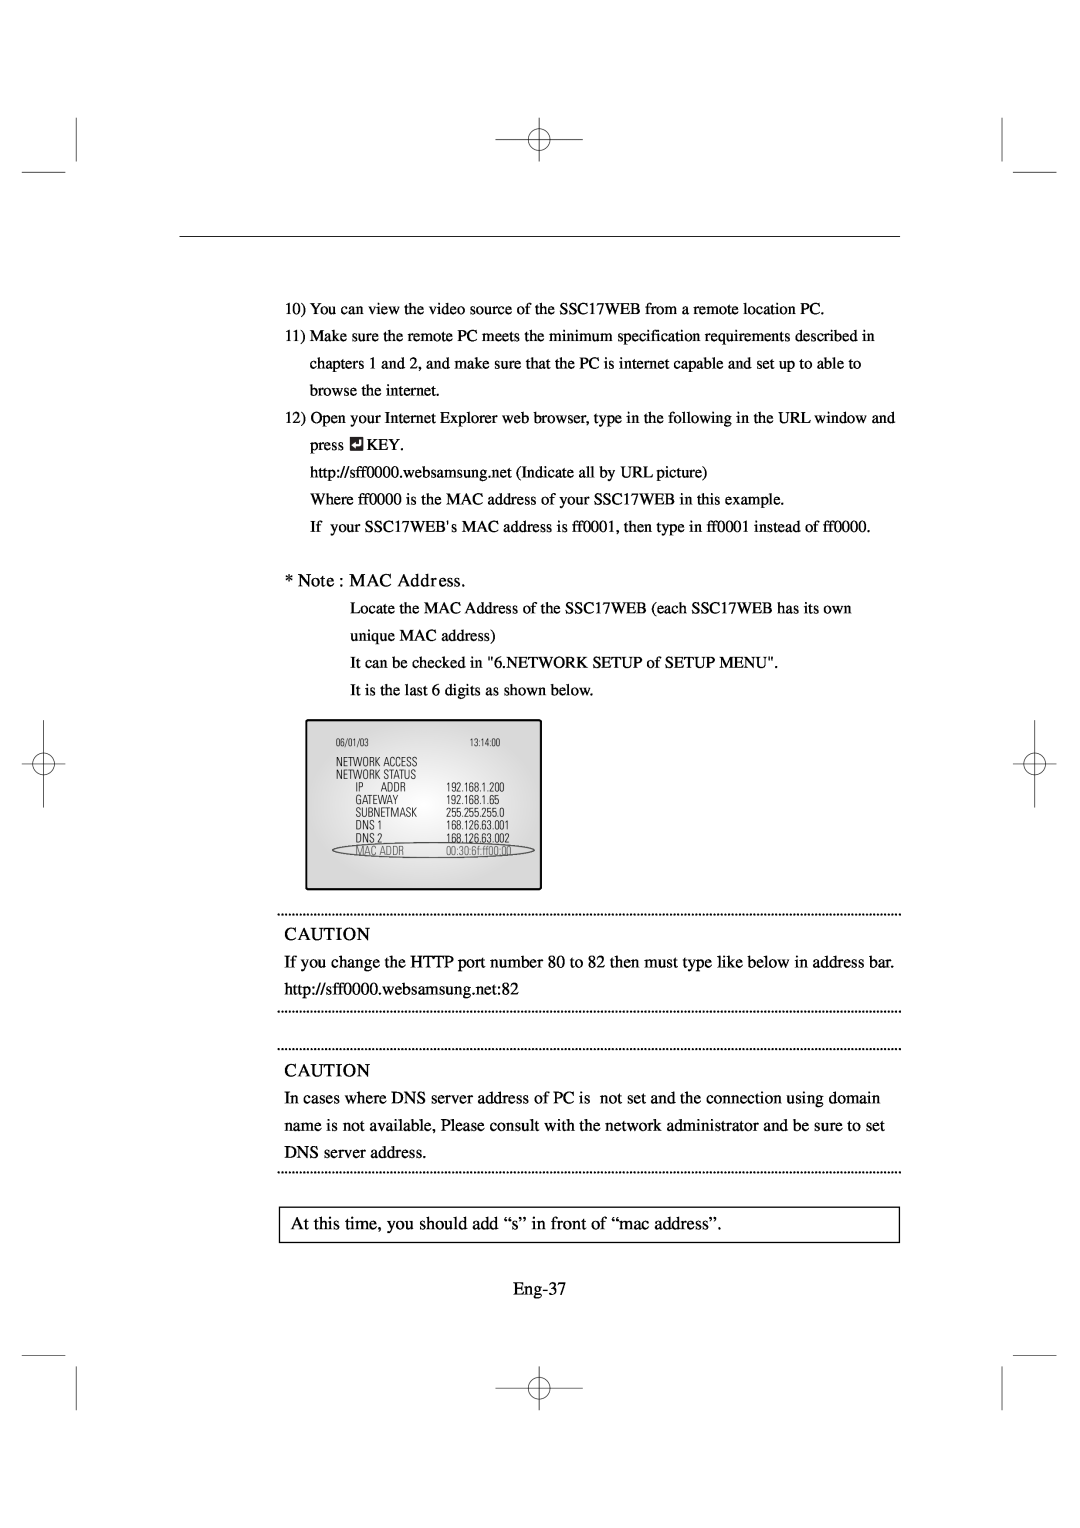 Samsung SSC17WEB manual Note MAC Address, Eng-37 